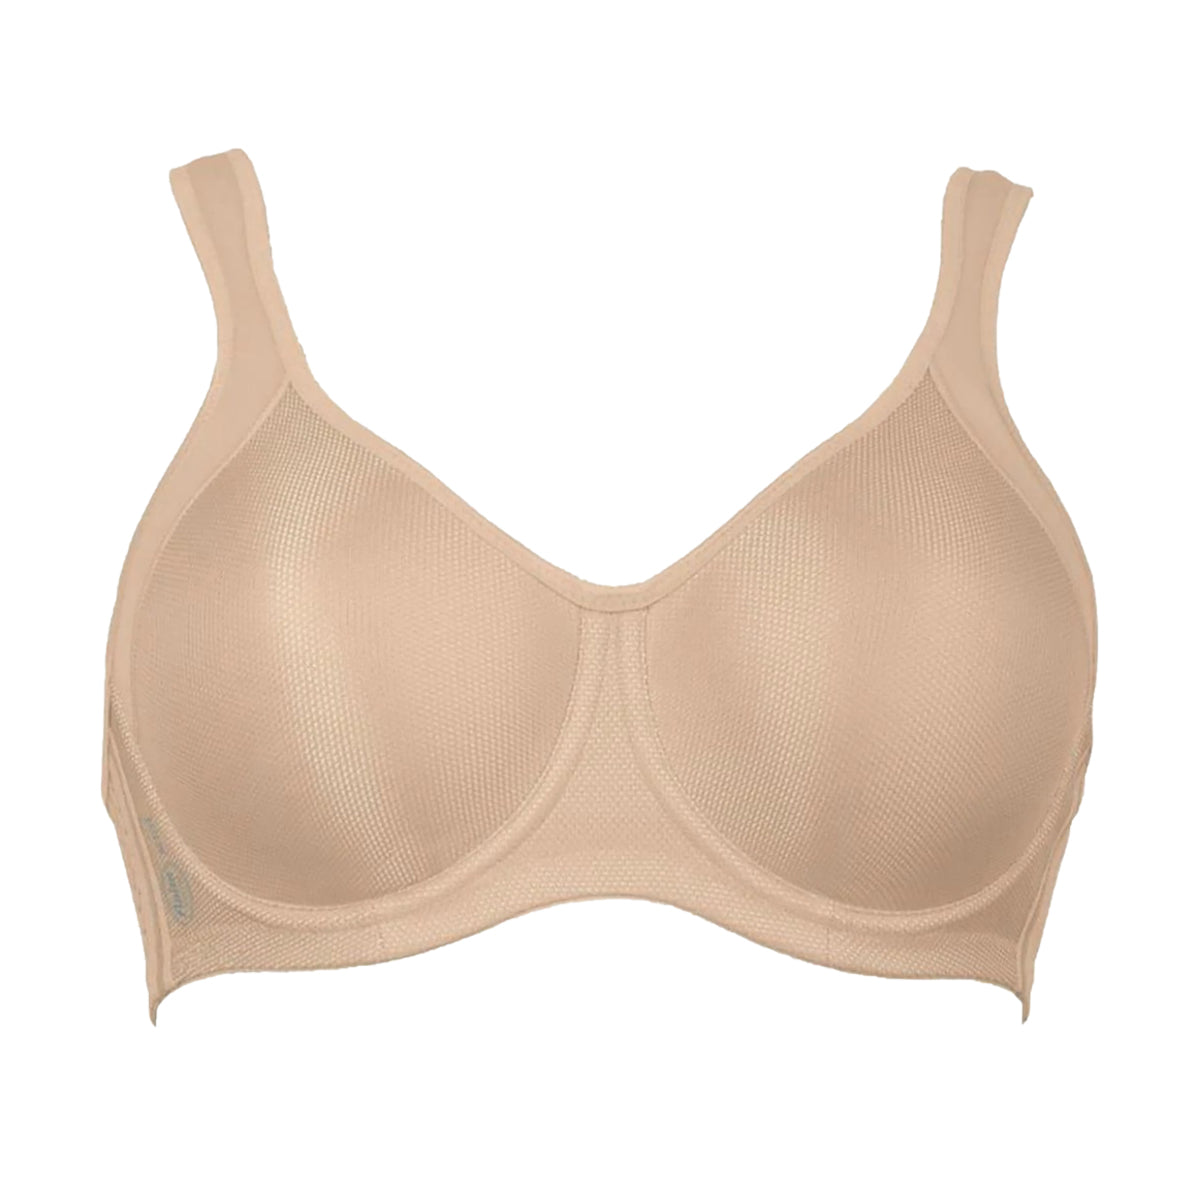 Wholesale 35 c bra For Supportive Underwear 